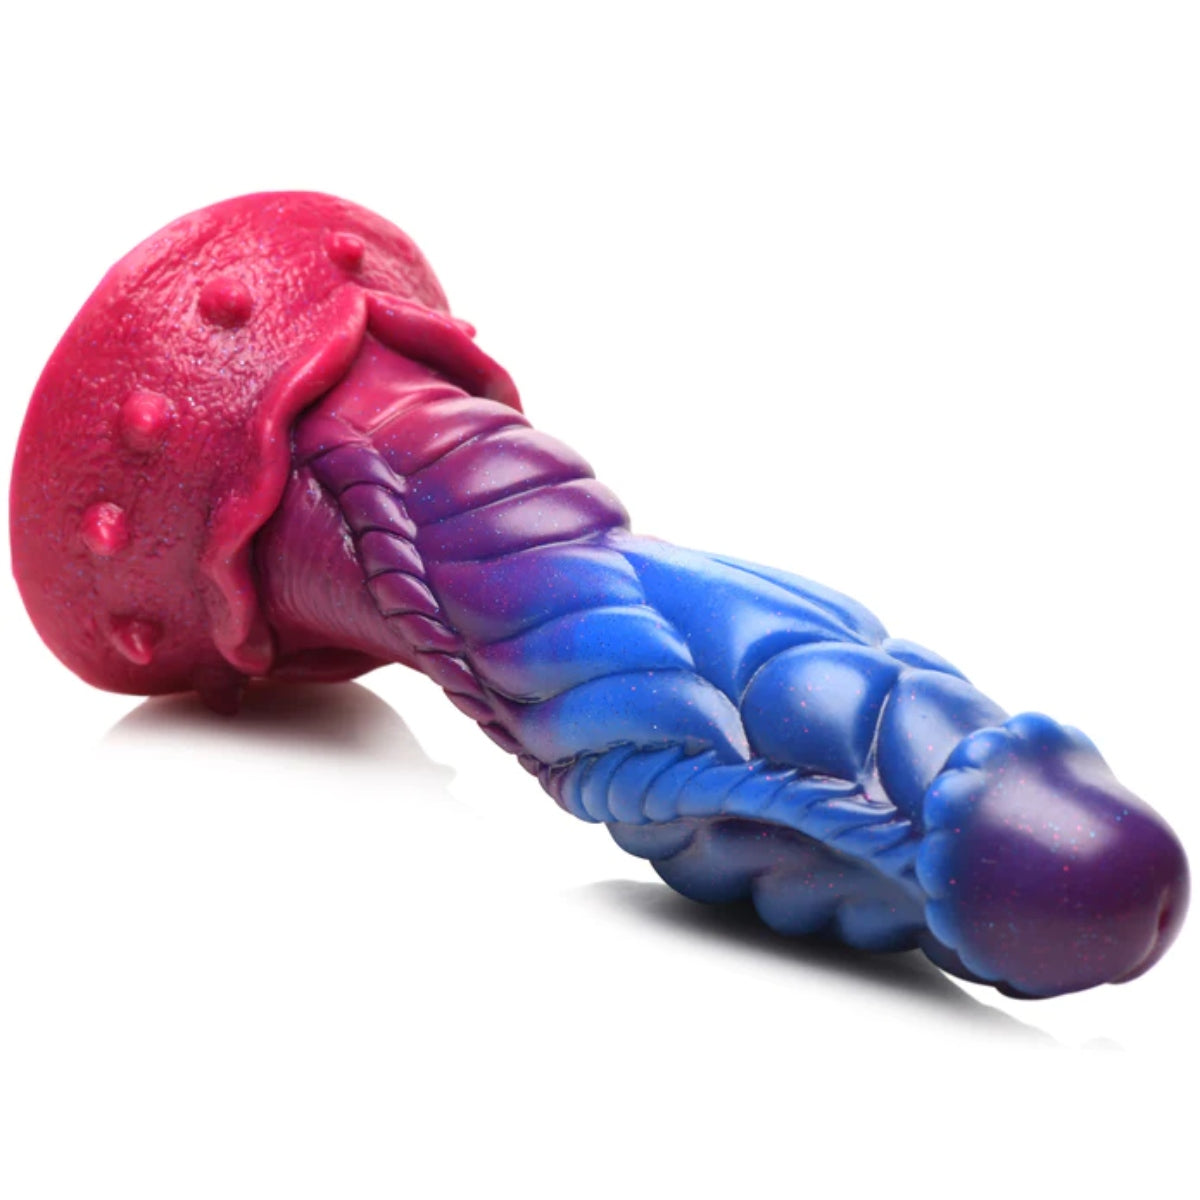 Creature Cocks Intruder Alien Silicone Dildo Purple Blue Pink - Simply Pleasure